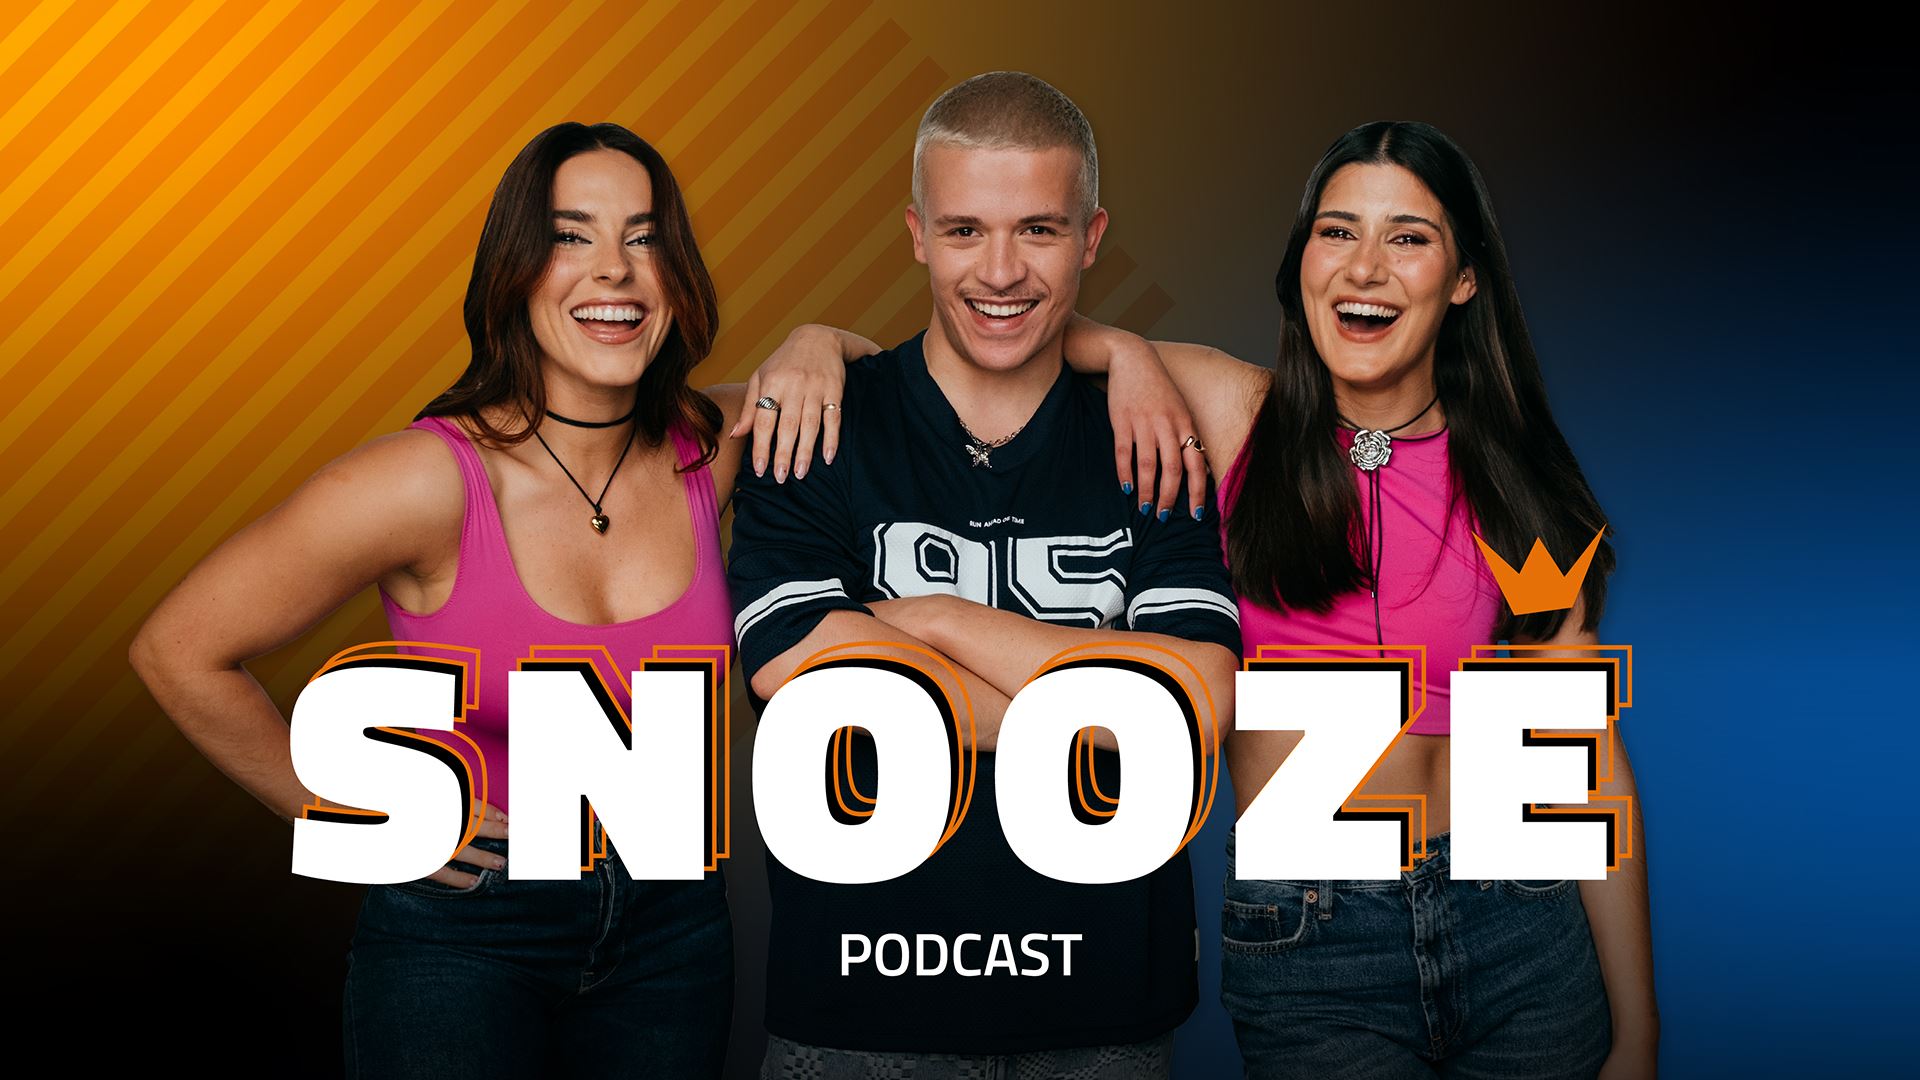 Snooze Podcast#26 | Engates bizarros